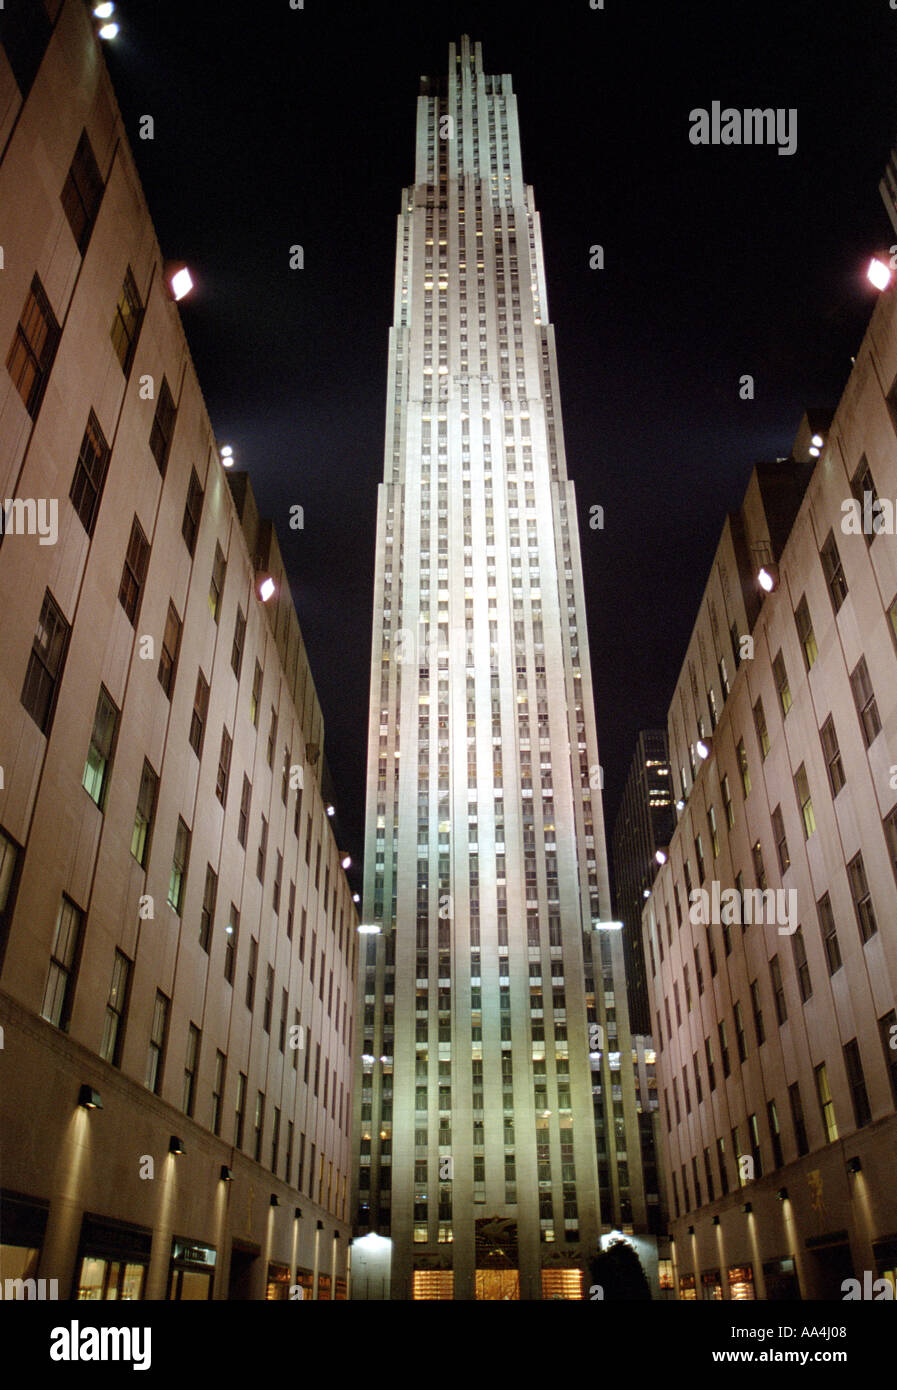 View looking up at the GE Building at Rockefeller Plaza Illuminated at Night Stock Photo